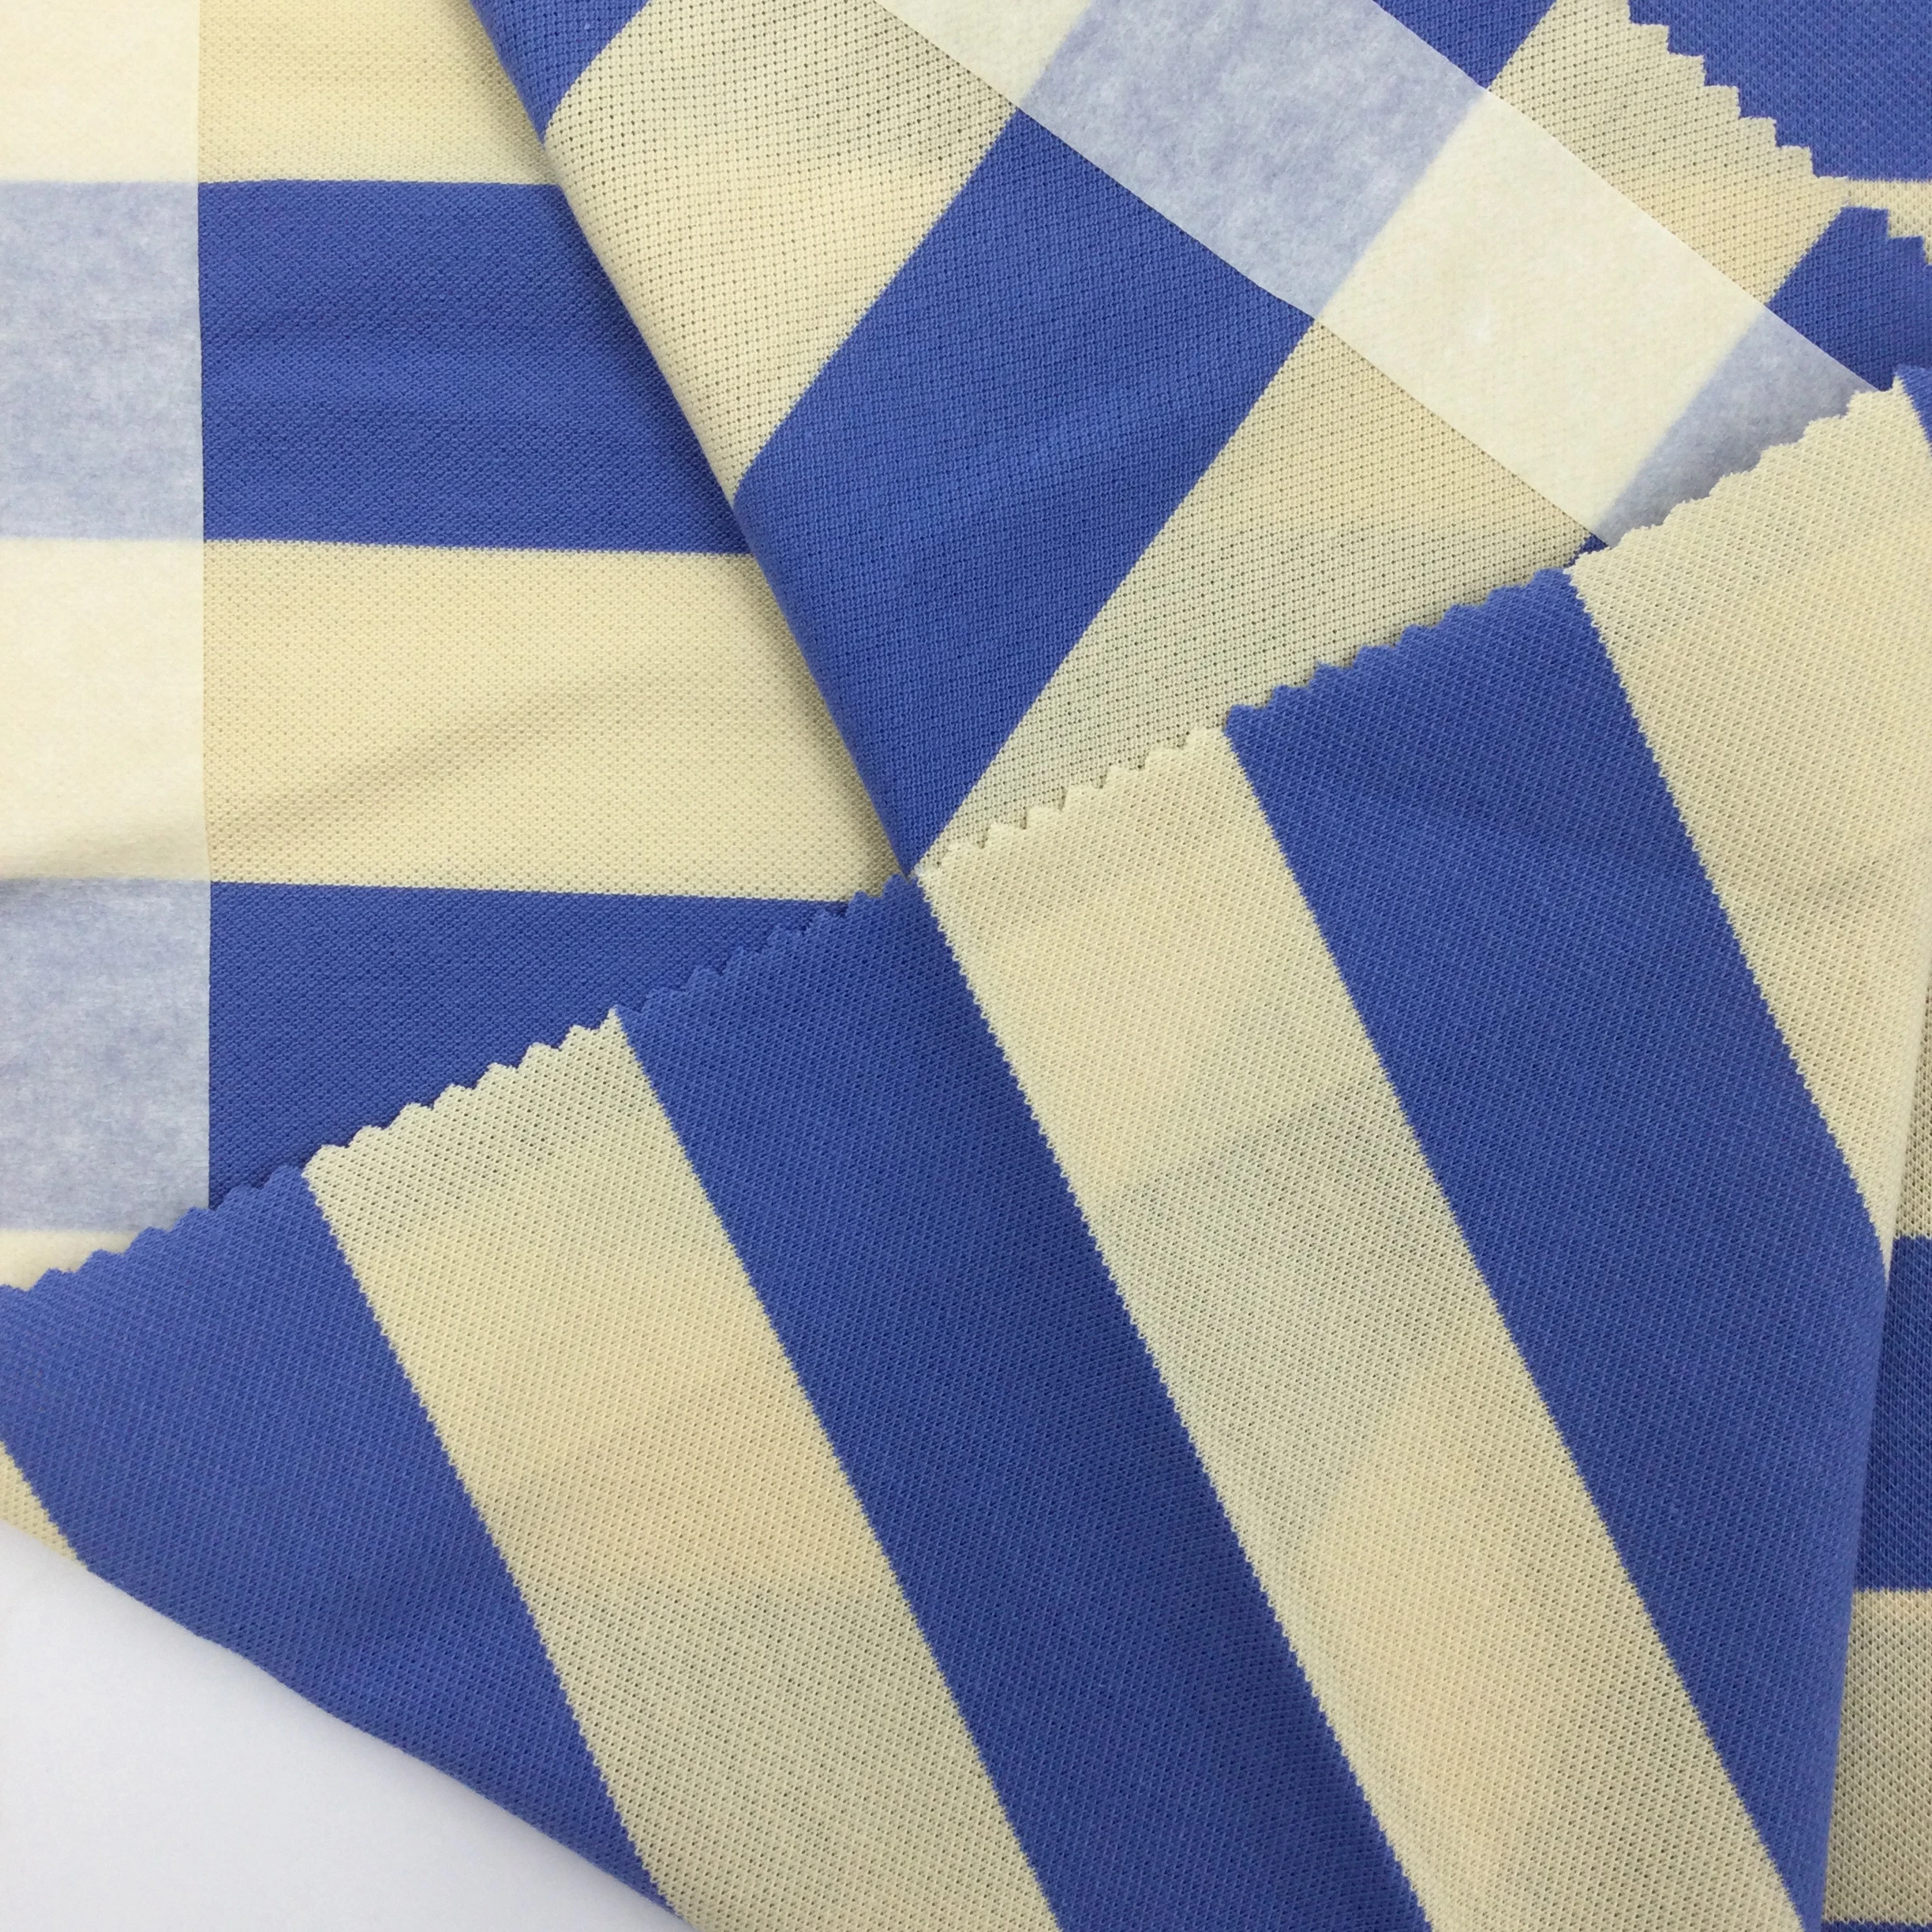 32S+30D COTTON SPANDEX FEEDER STRIPE PIQUE  tela algodon  stripe fabric YARN DYED TEXTILE  POLO SHIRT FABRIC